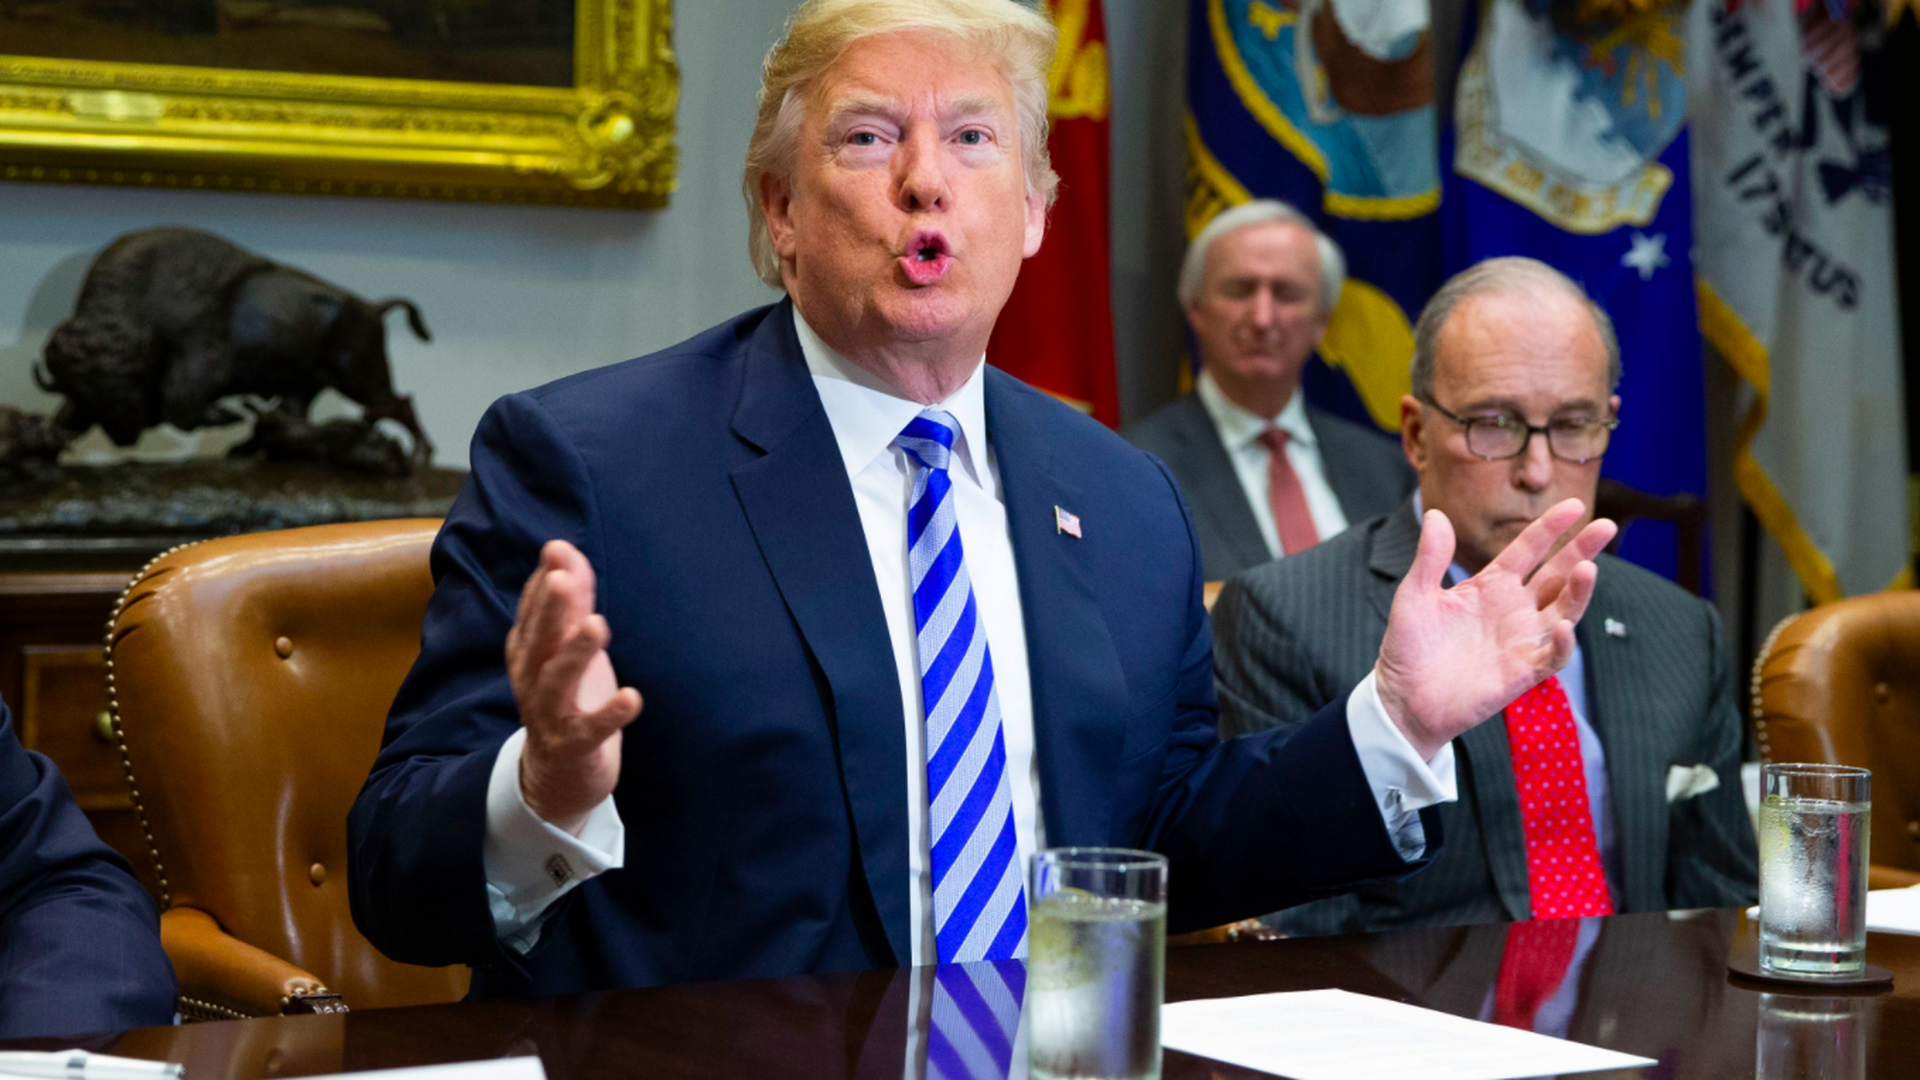 Trump gestures at a meeting